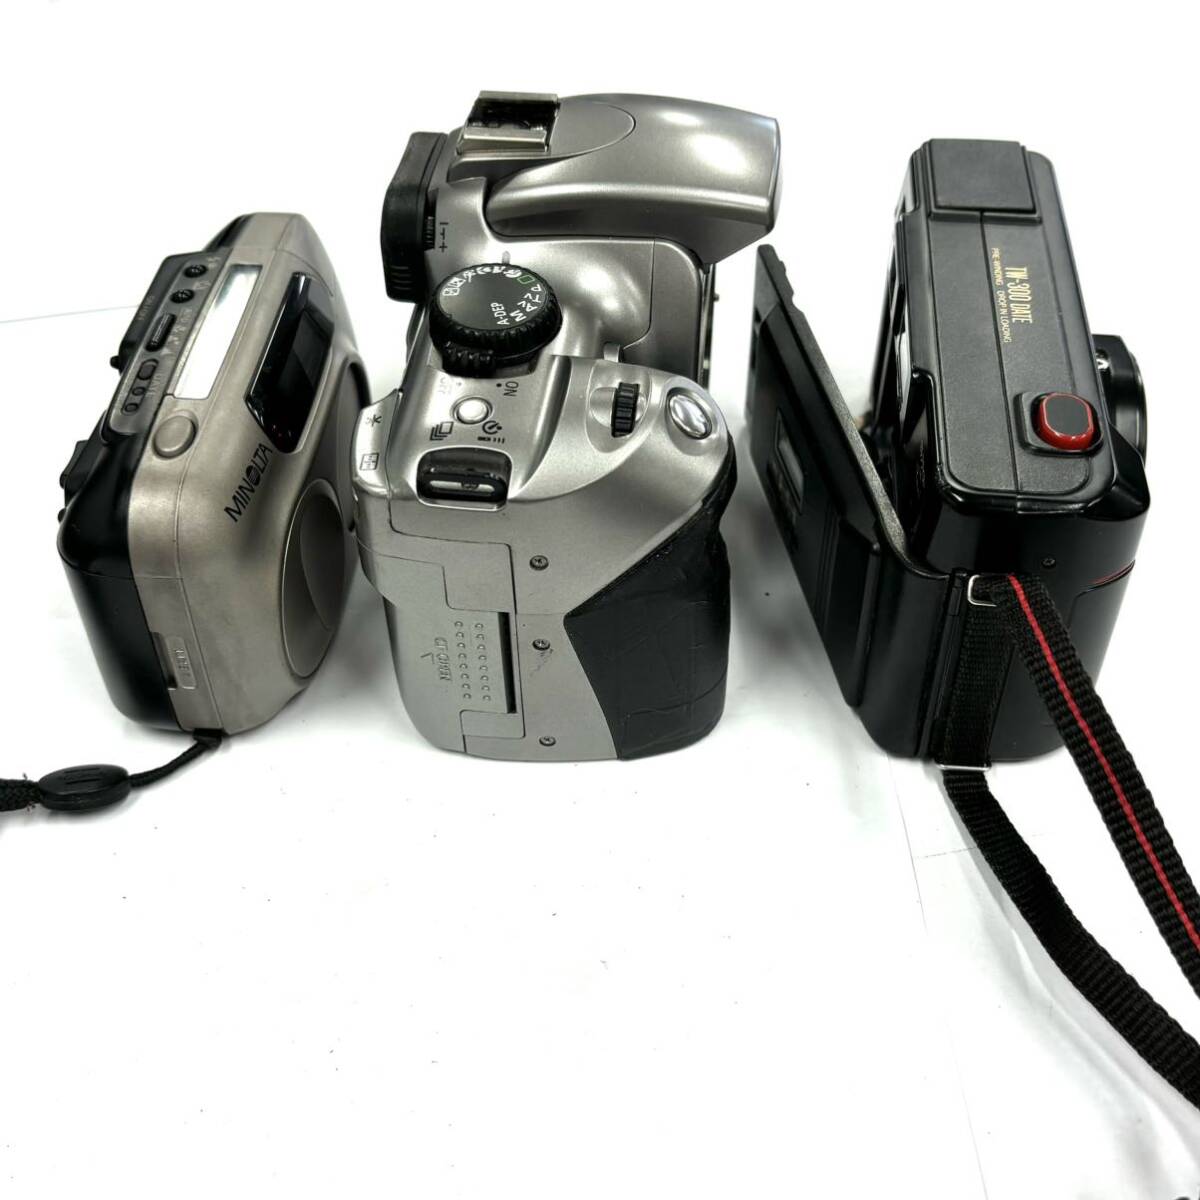 H2906 カメラ まとめ フィルムカメラ デジタルカメラ Canon キヤノン EOS Kiss DS6041 FUJI TW-300 DATE MINOLTA ミノルタ Capios25 中古の画像6